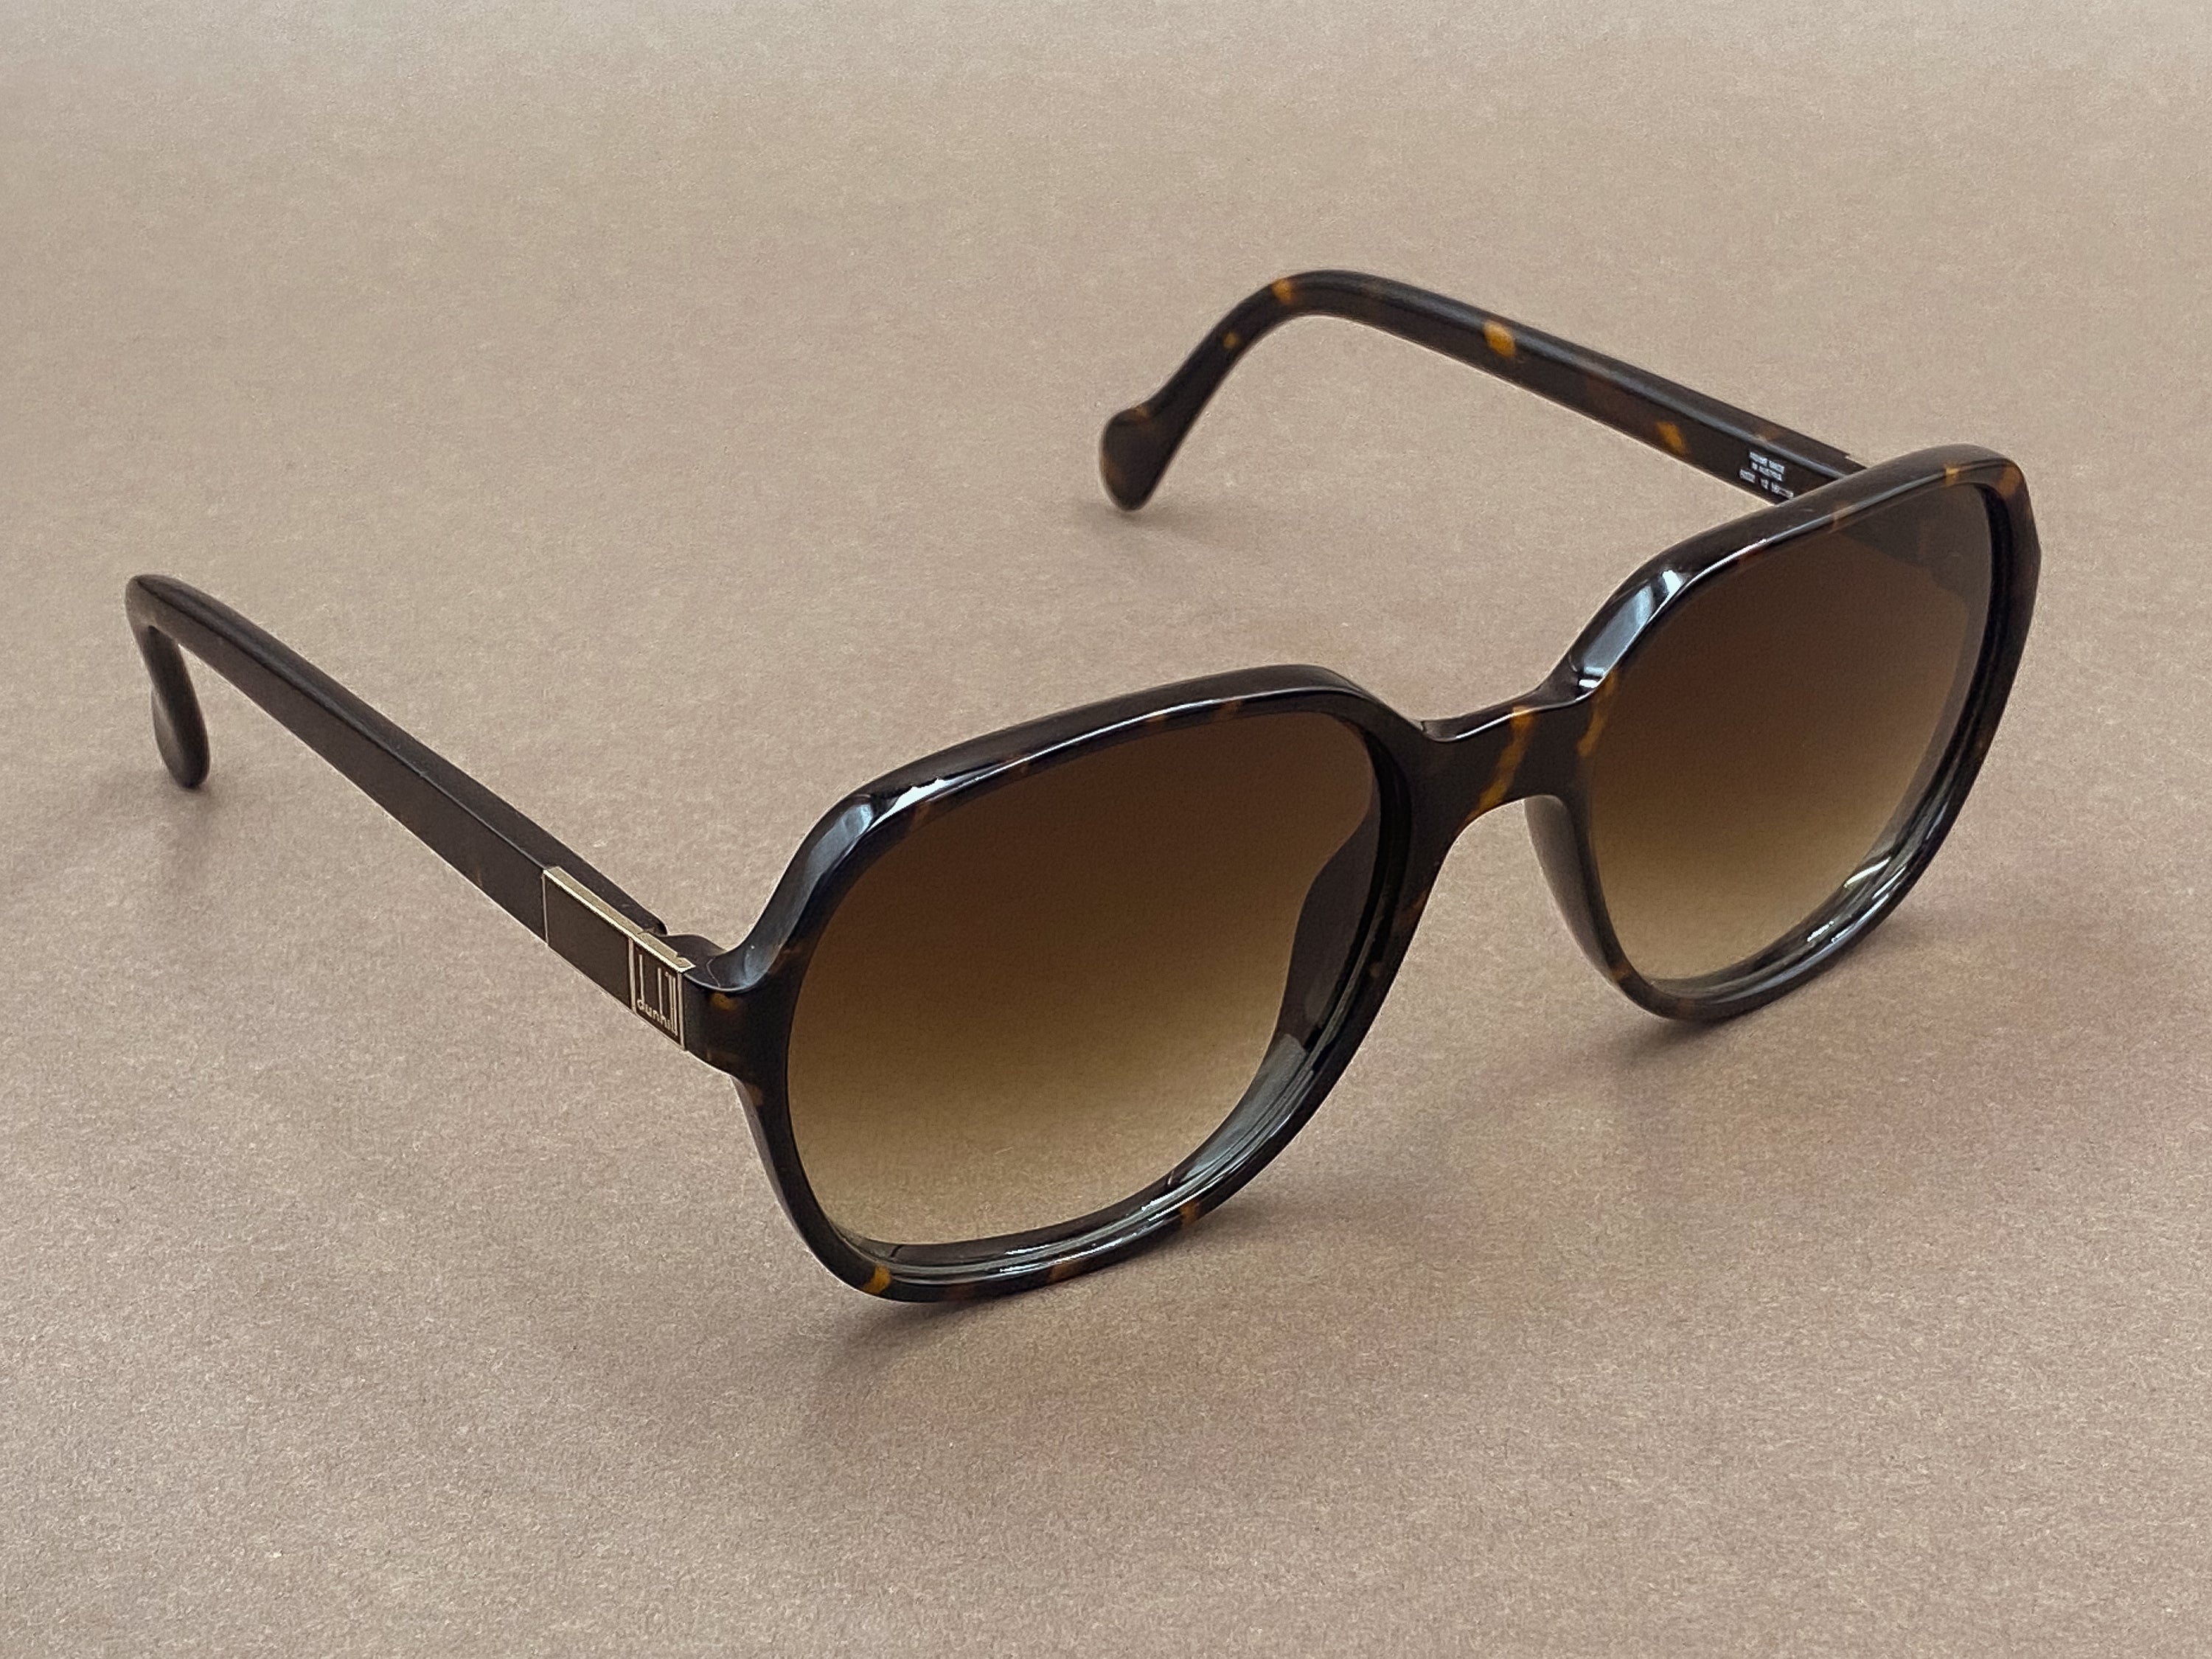 Dunhill 6032 sunglasses